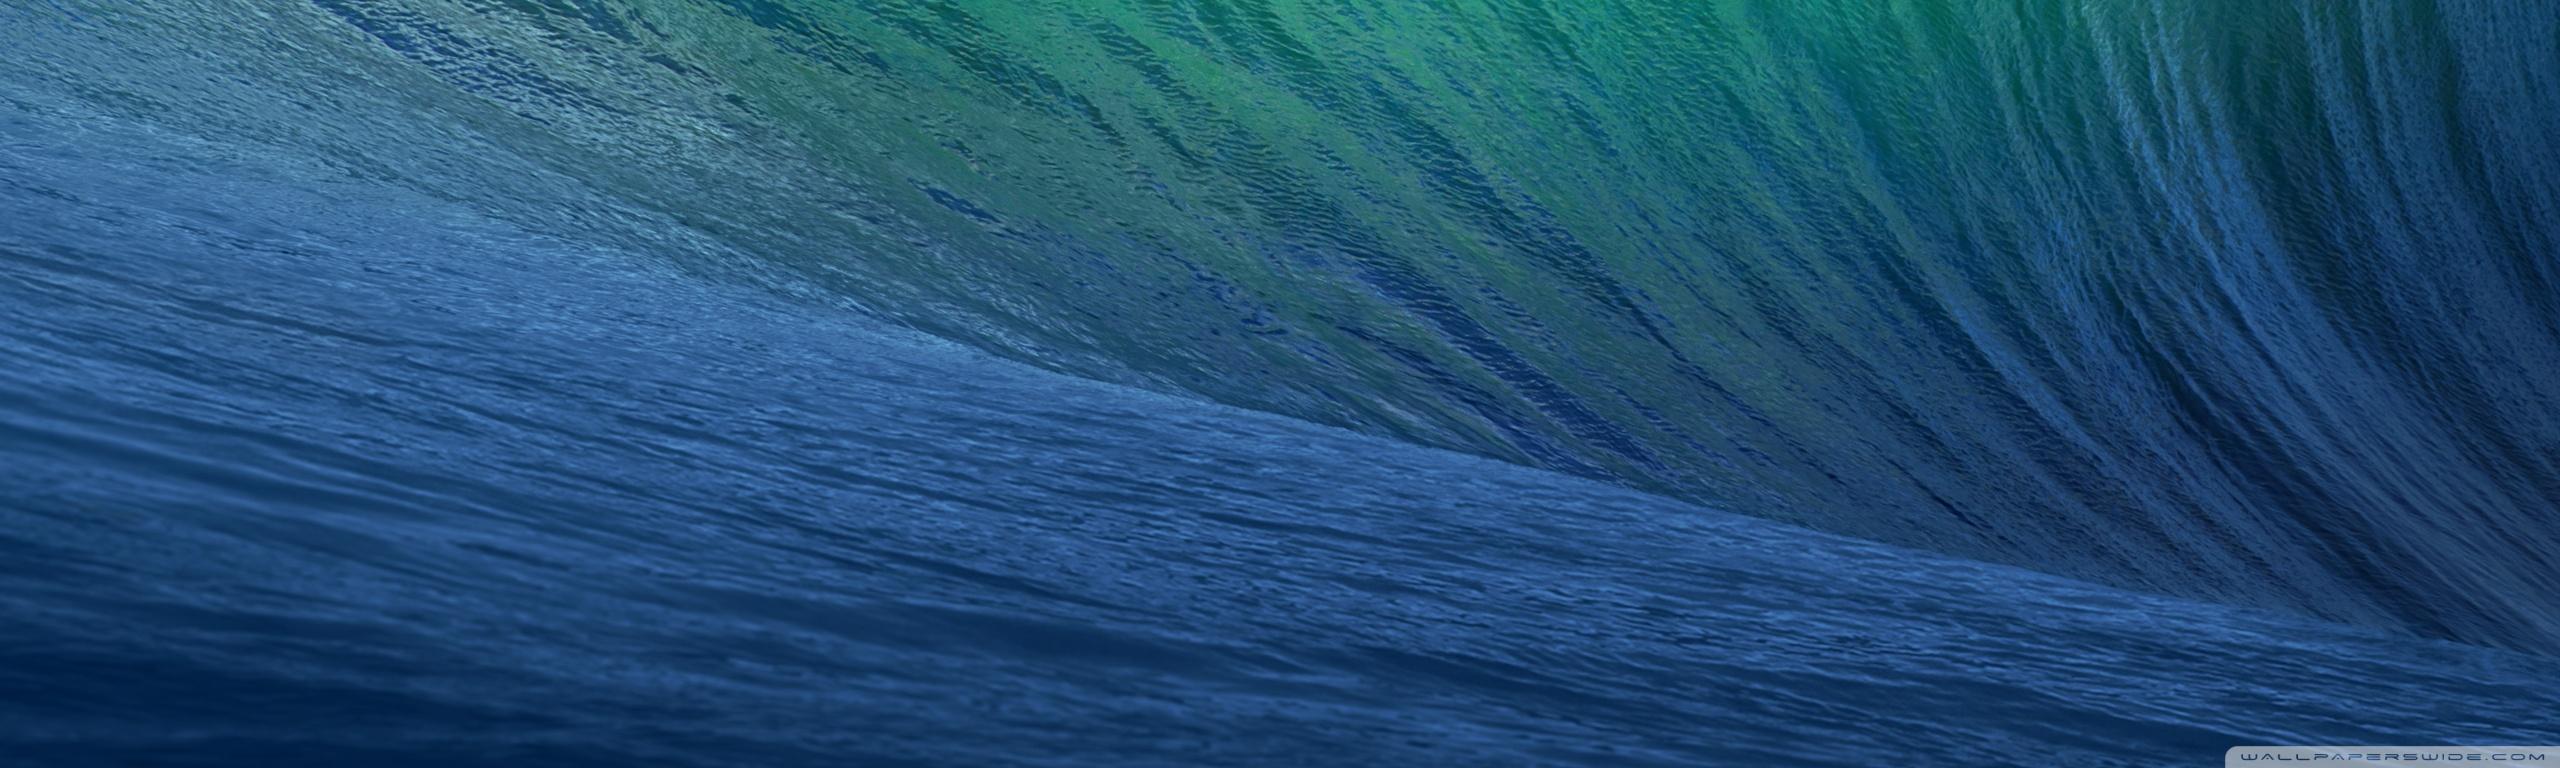 OS X Mavericks Wallpaper